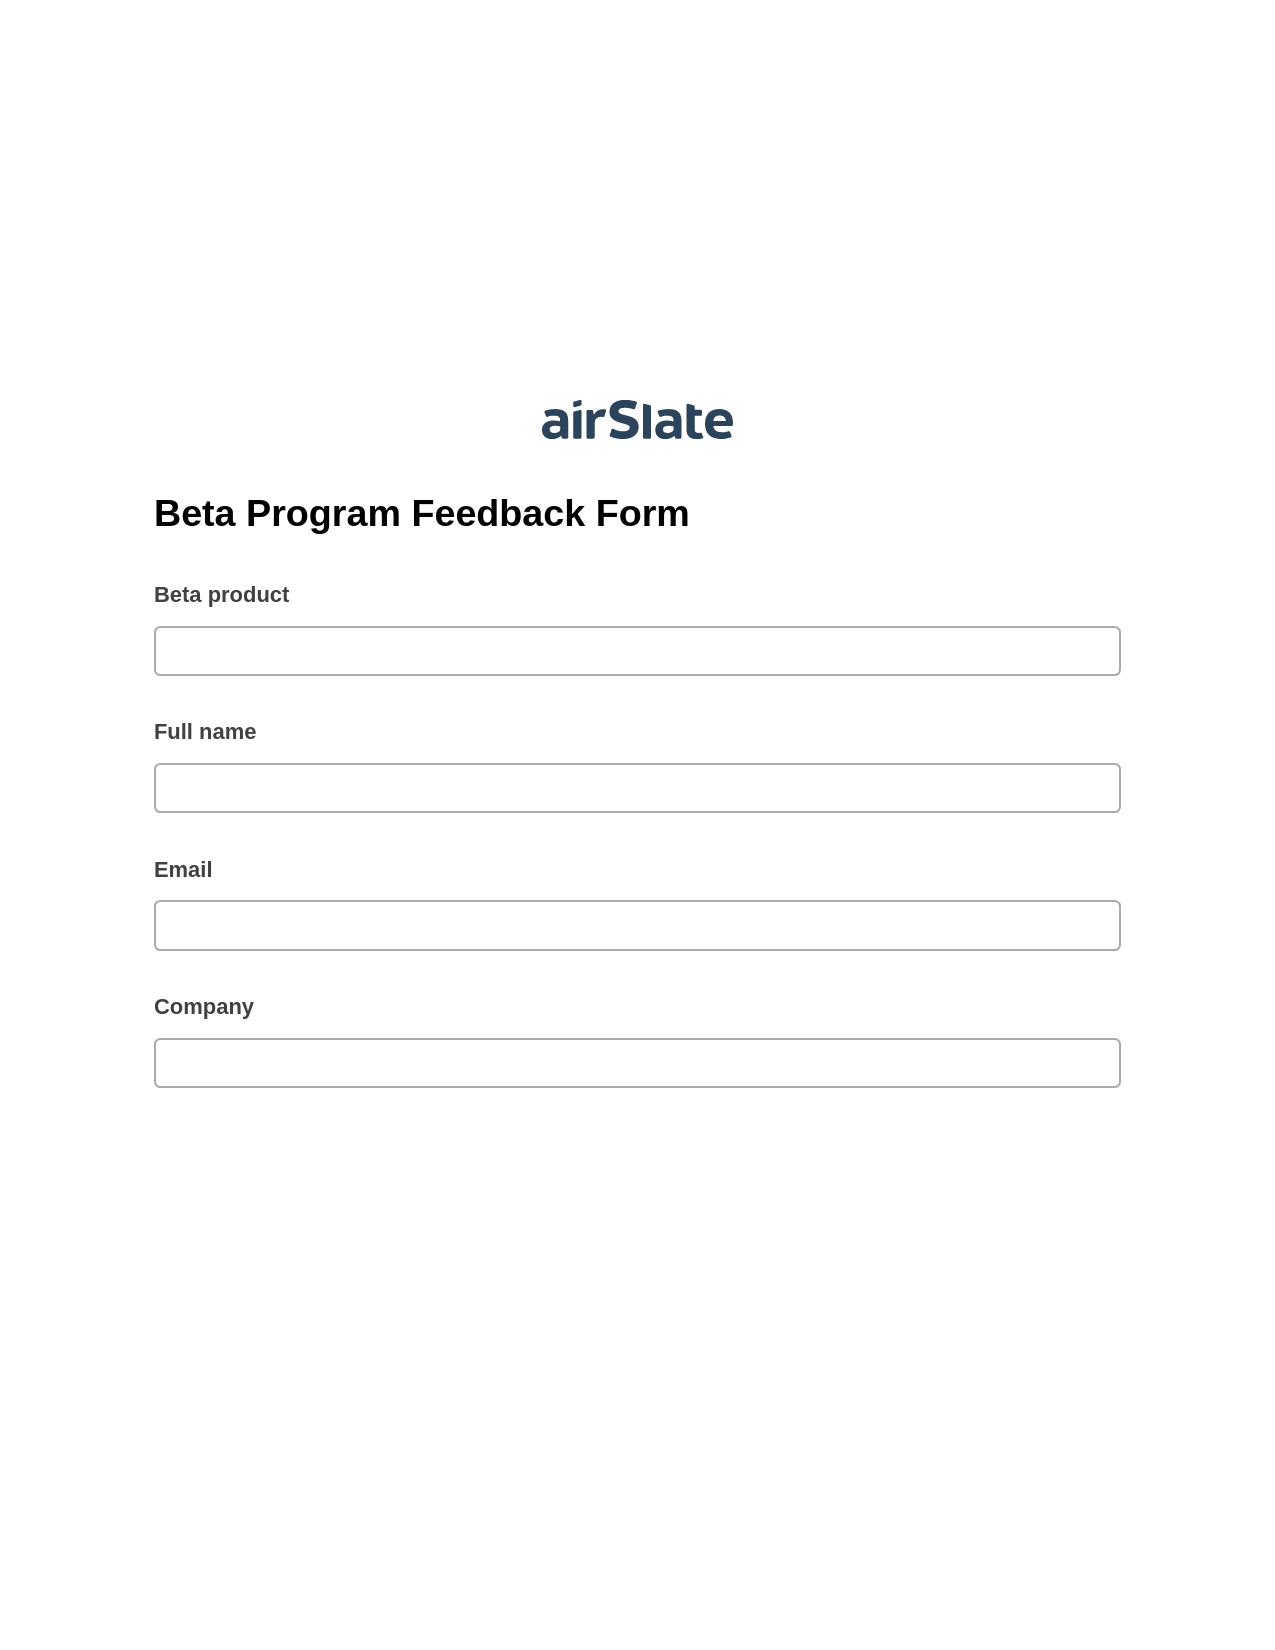 Beta Program Feedback Form Pre-fill Document Bot, Pre-fill with Custom Data Bot, Webhook Postfinish Bot